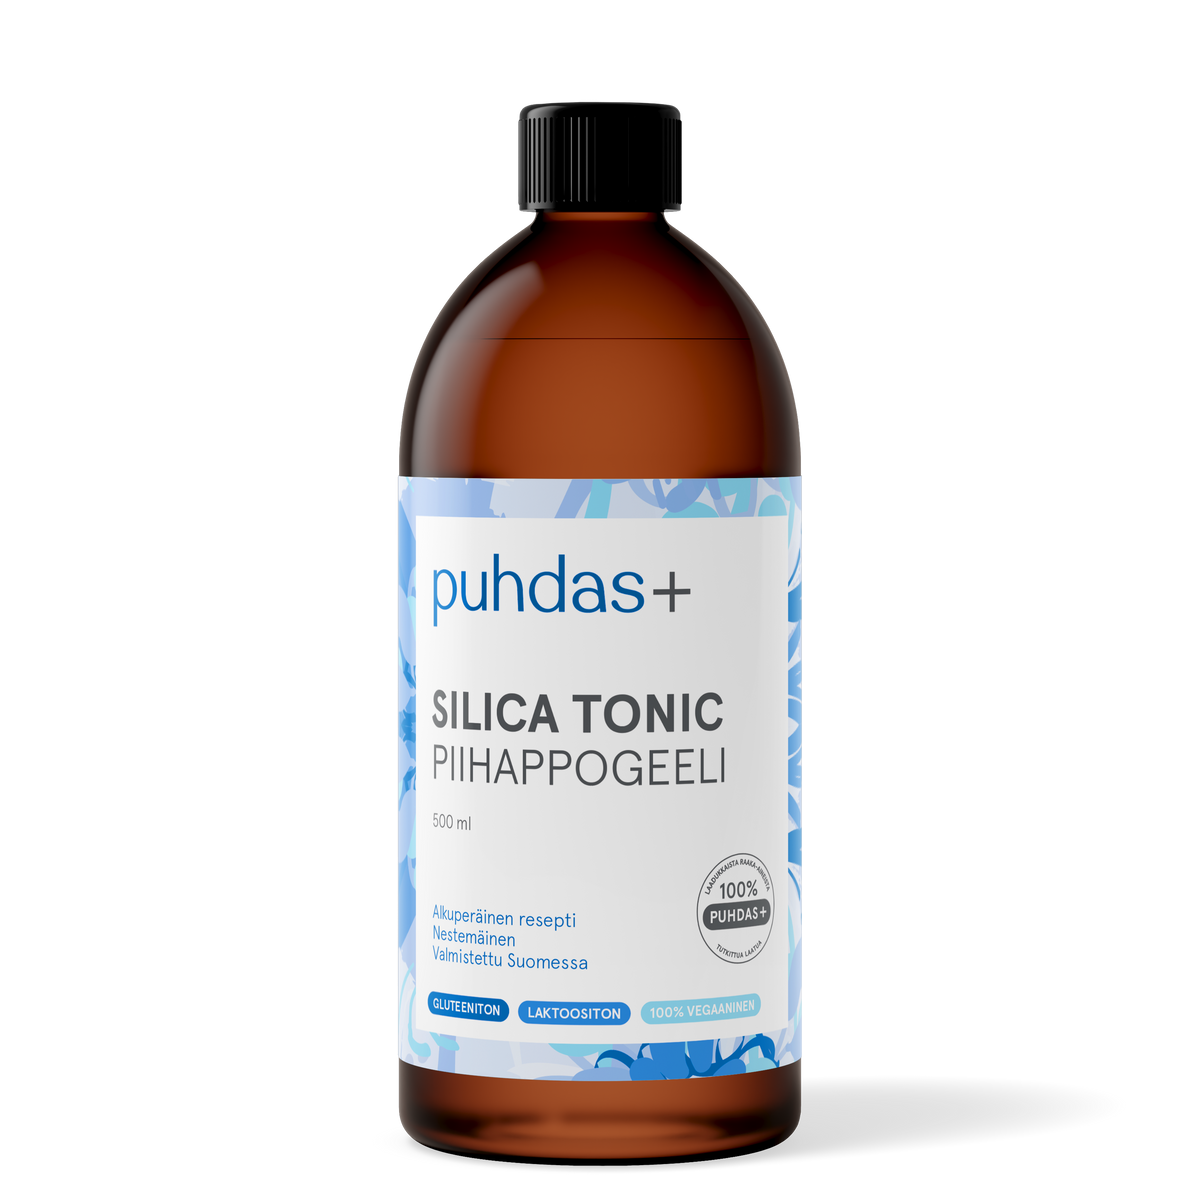 Puhdas+ Silica Tonic Piihappogeeli 500 ml